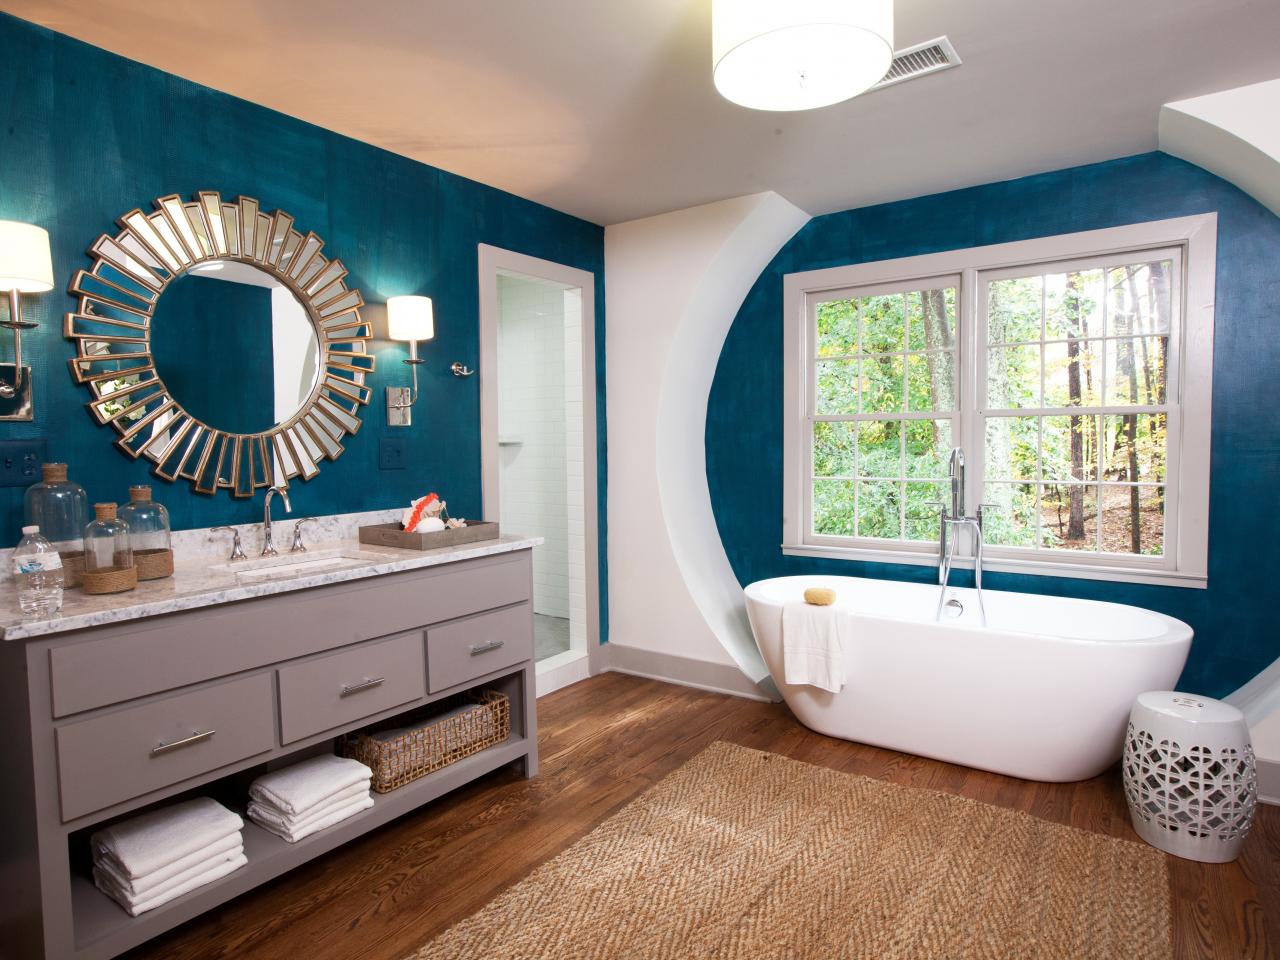 20 RetroStyle Bathroom Design Ideas 18225 Bathroom Ideas